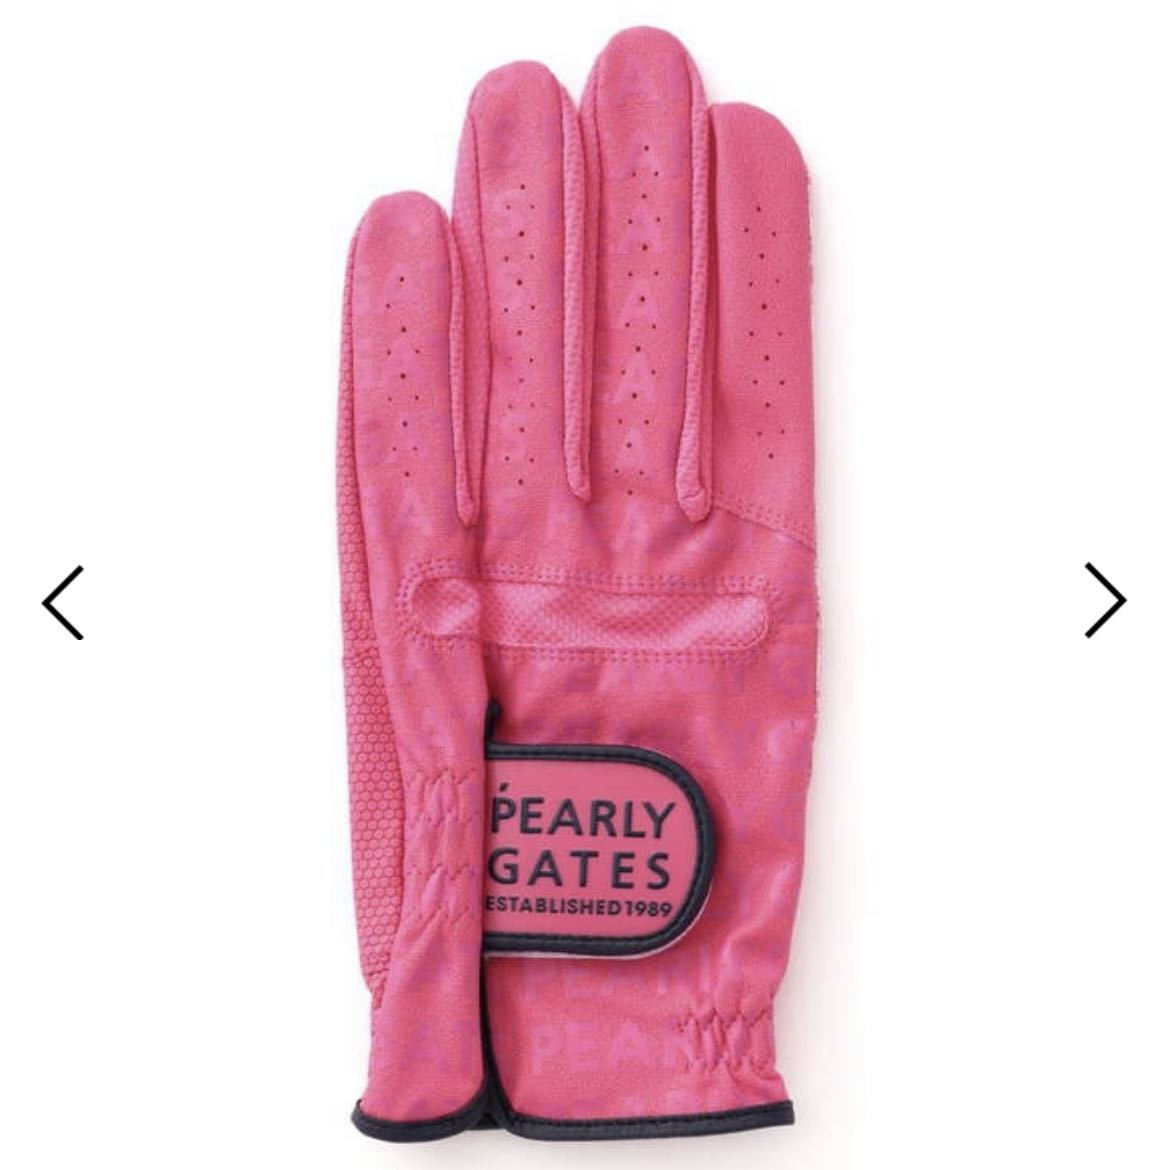  Pearly Gates розовый левый рука для с одной стороны перчатка S(19~20cm)2022 год 